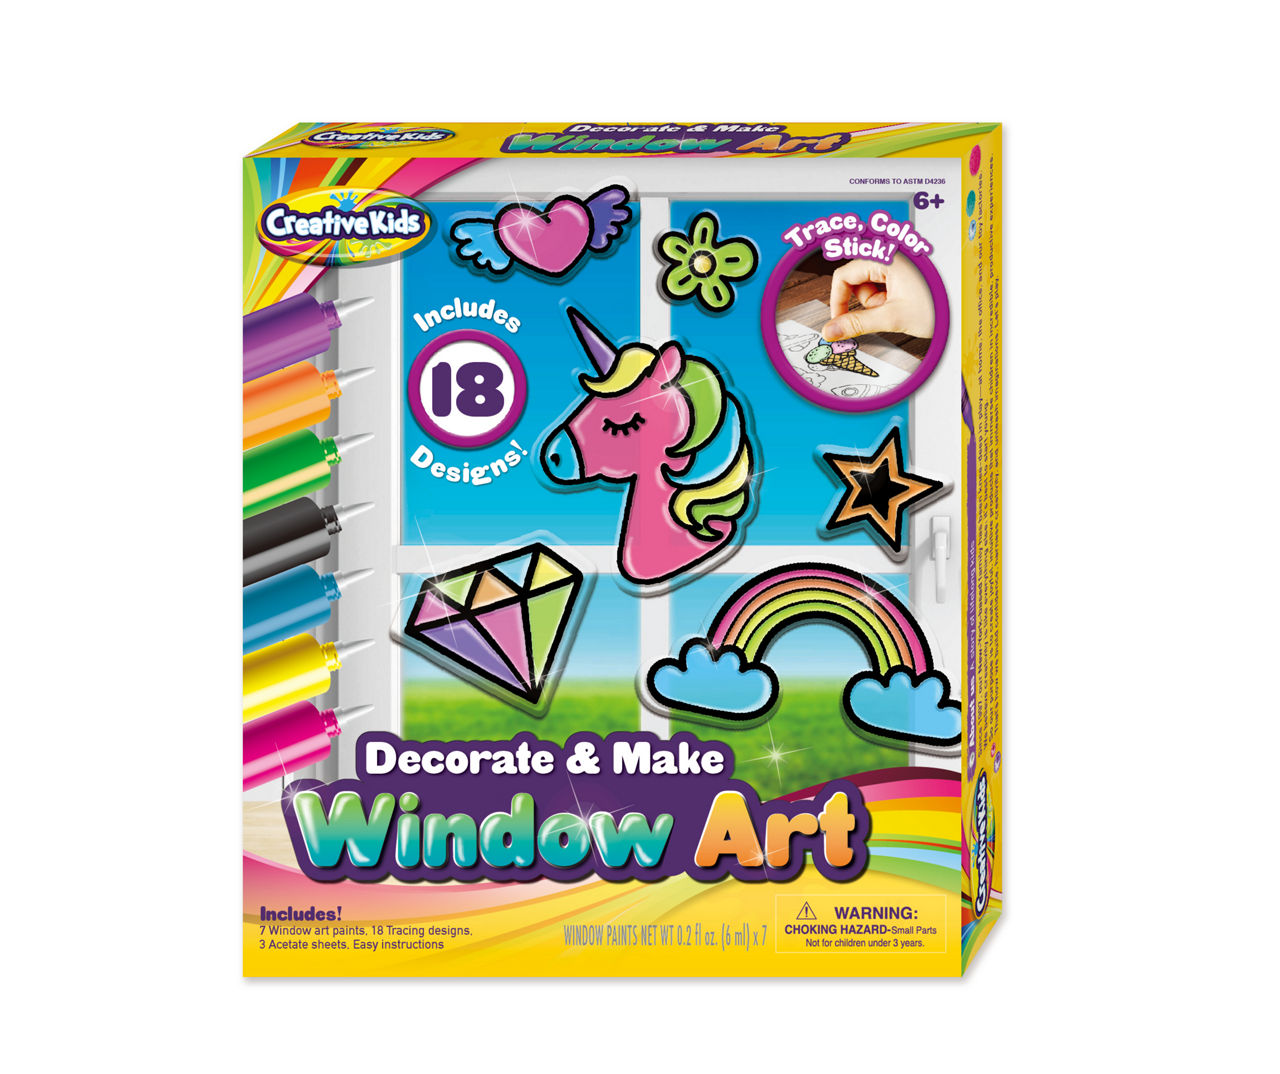 Creative Kids Window Art Kit Only $13.92 (Reg. $30)